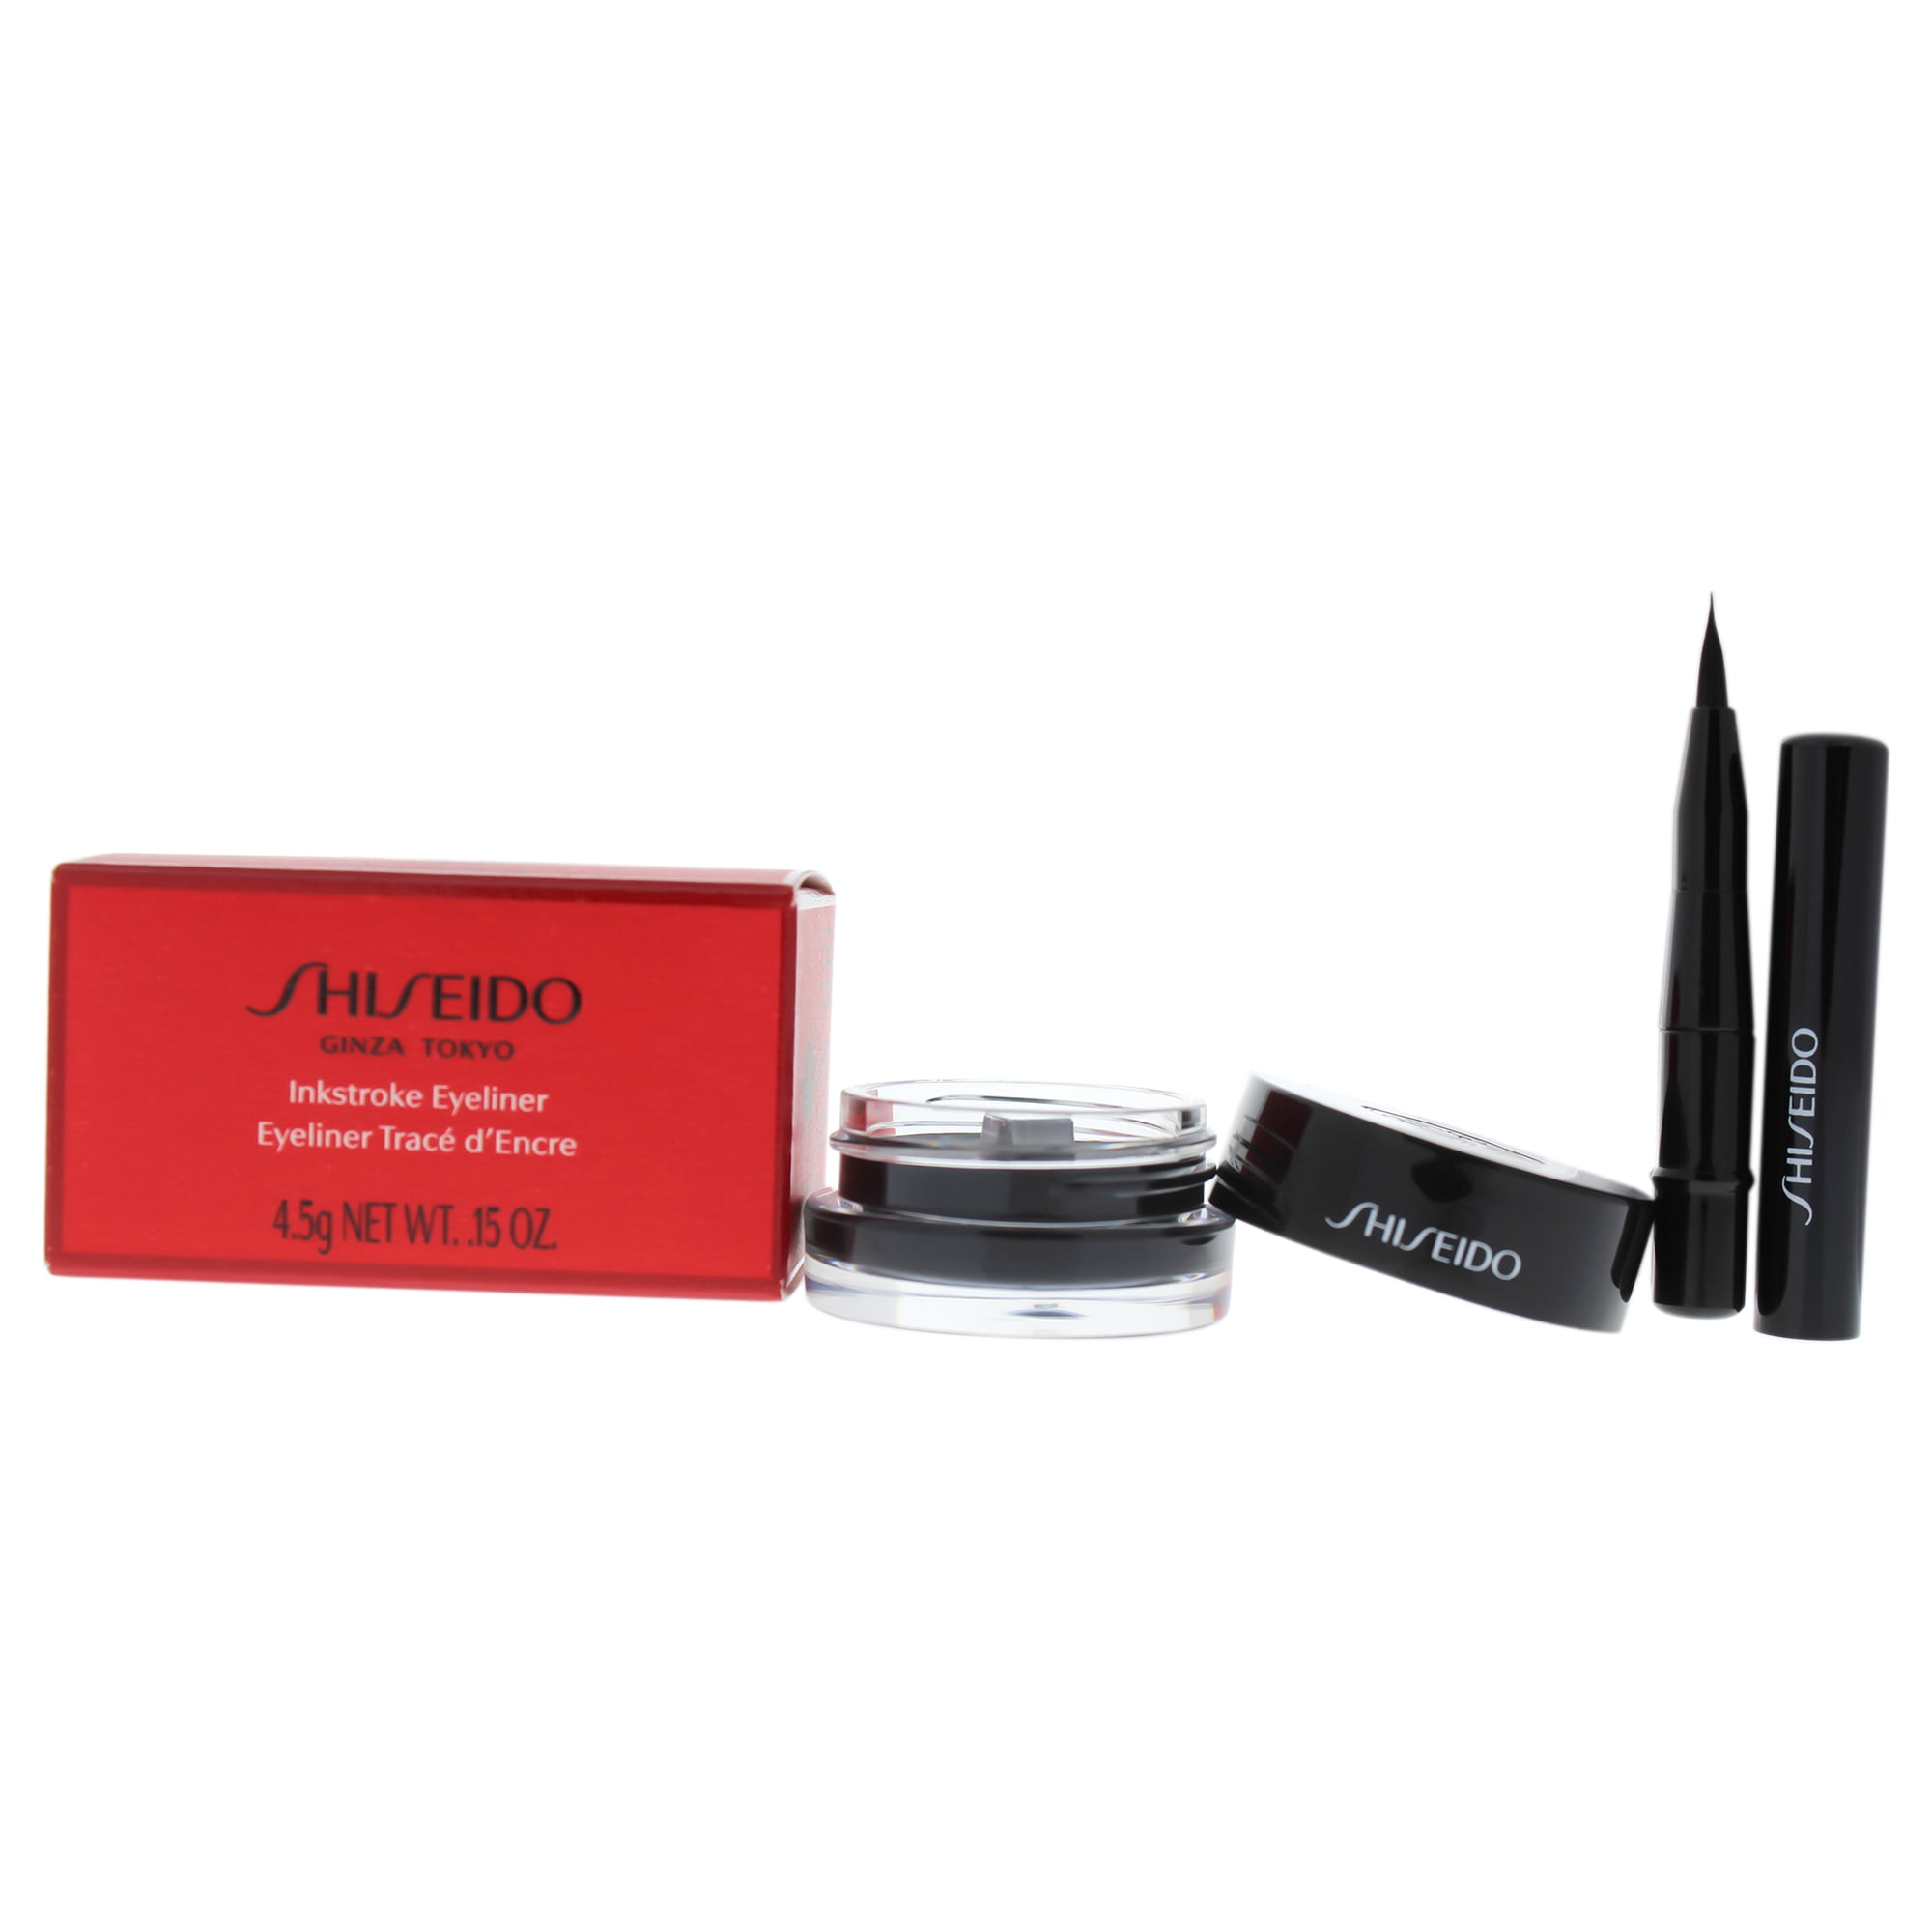 Fedt Vugge Hav Shiseido Inkstroke Eyeliner - BK901 Shikkoku Black 0.15 oz Eyeliner -  Walmart.com